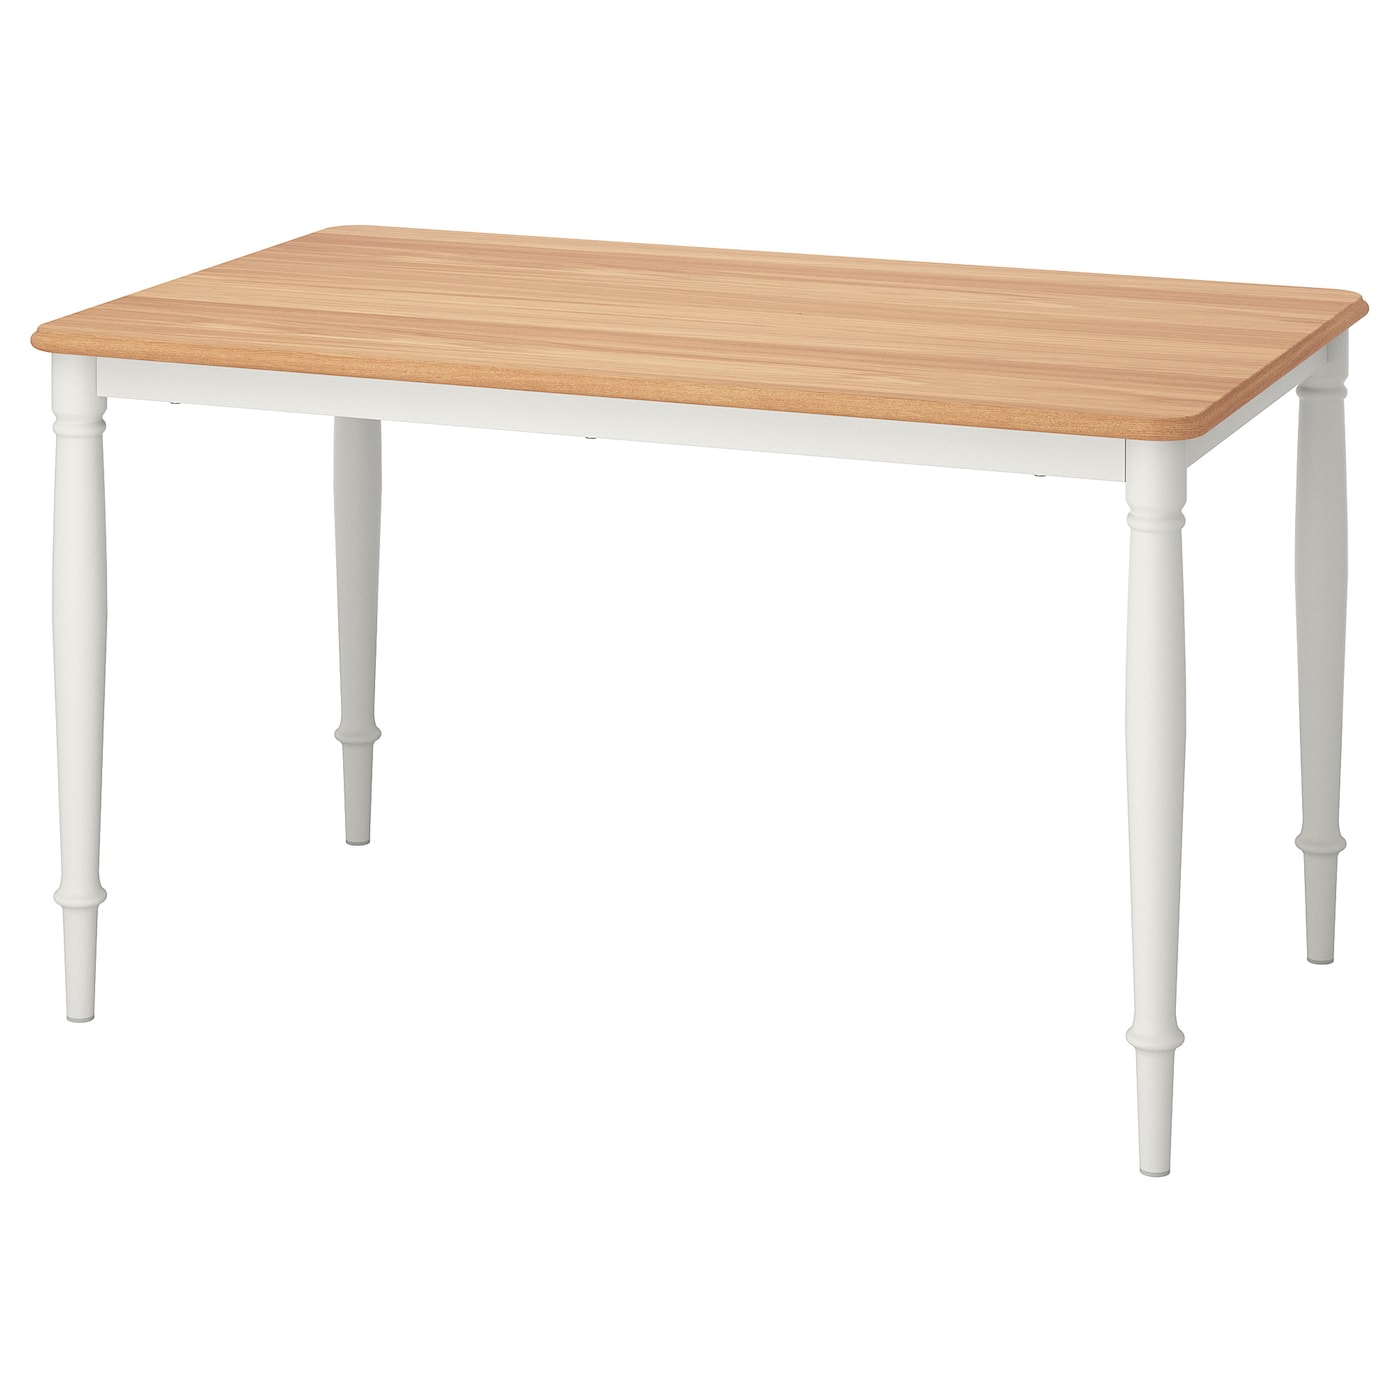 Стол обеденный - IKEA DANDERYD, 130х80 см, дубовый шпон/белый, ДАНДЭРЮД ИКЕА